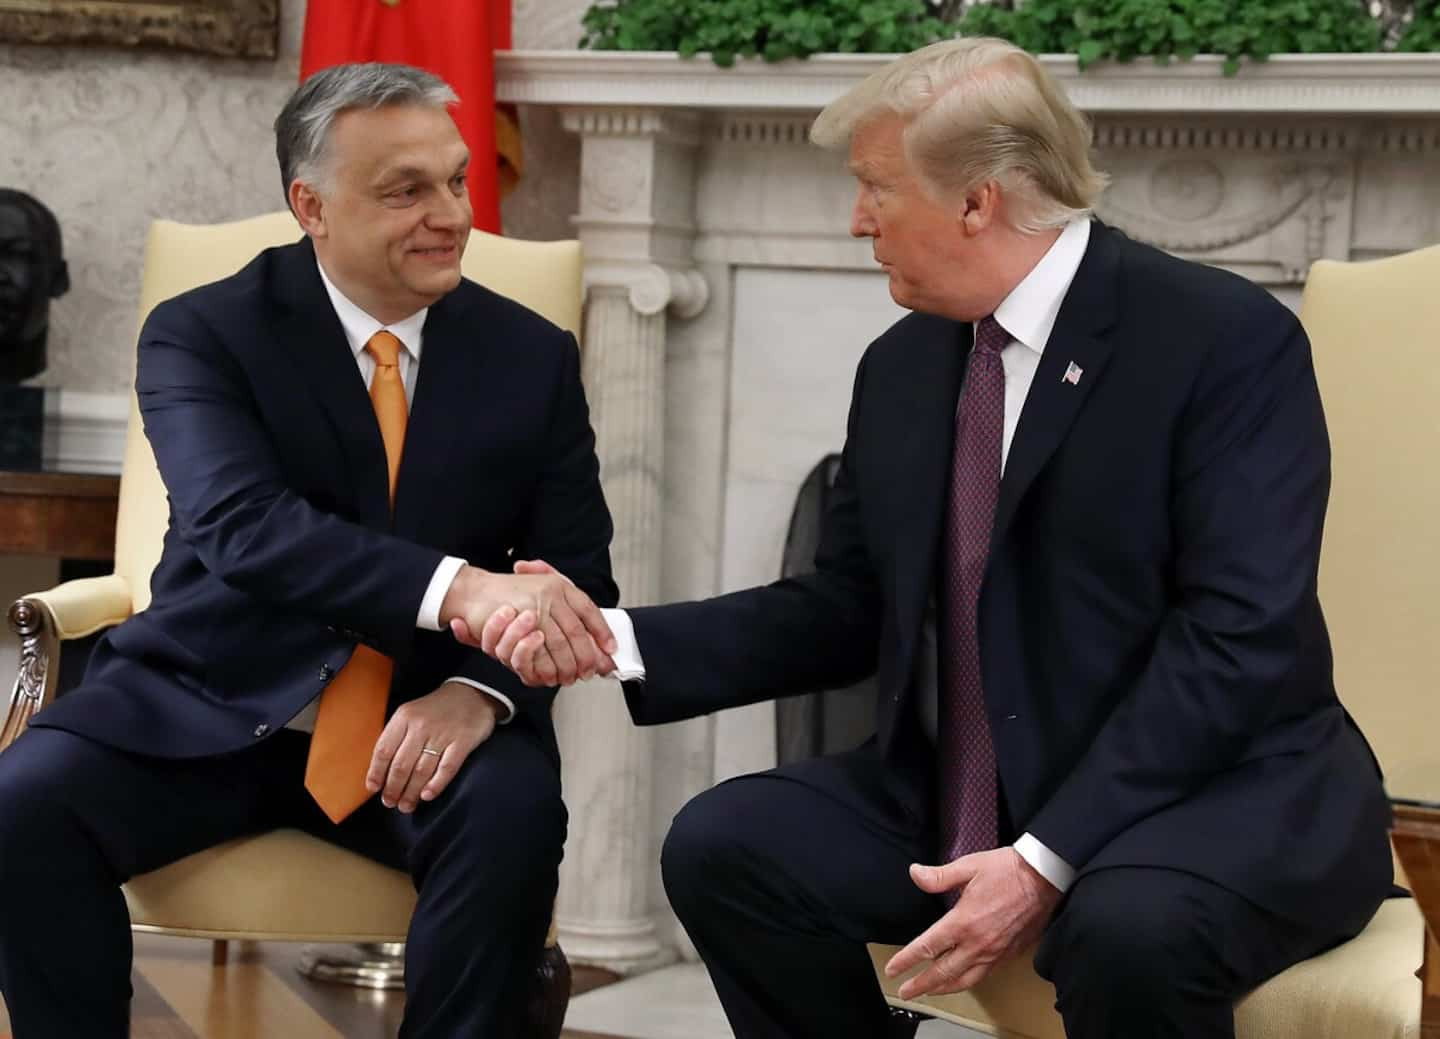 Viktor Orbán and Donald Trump in Texas